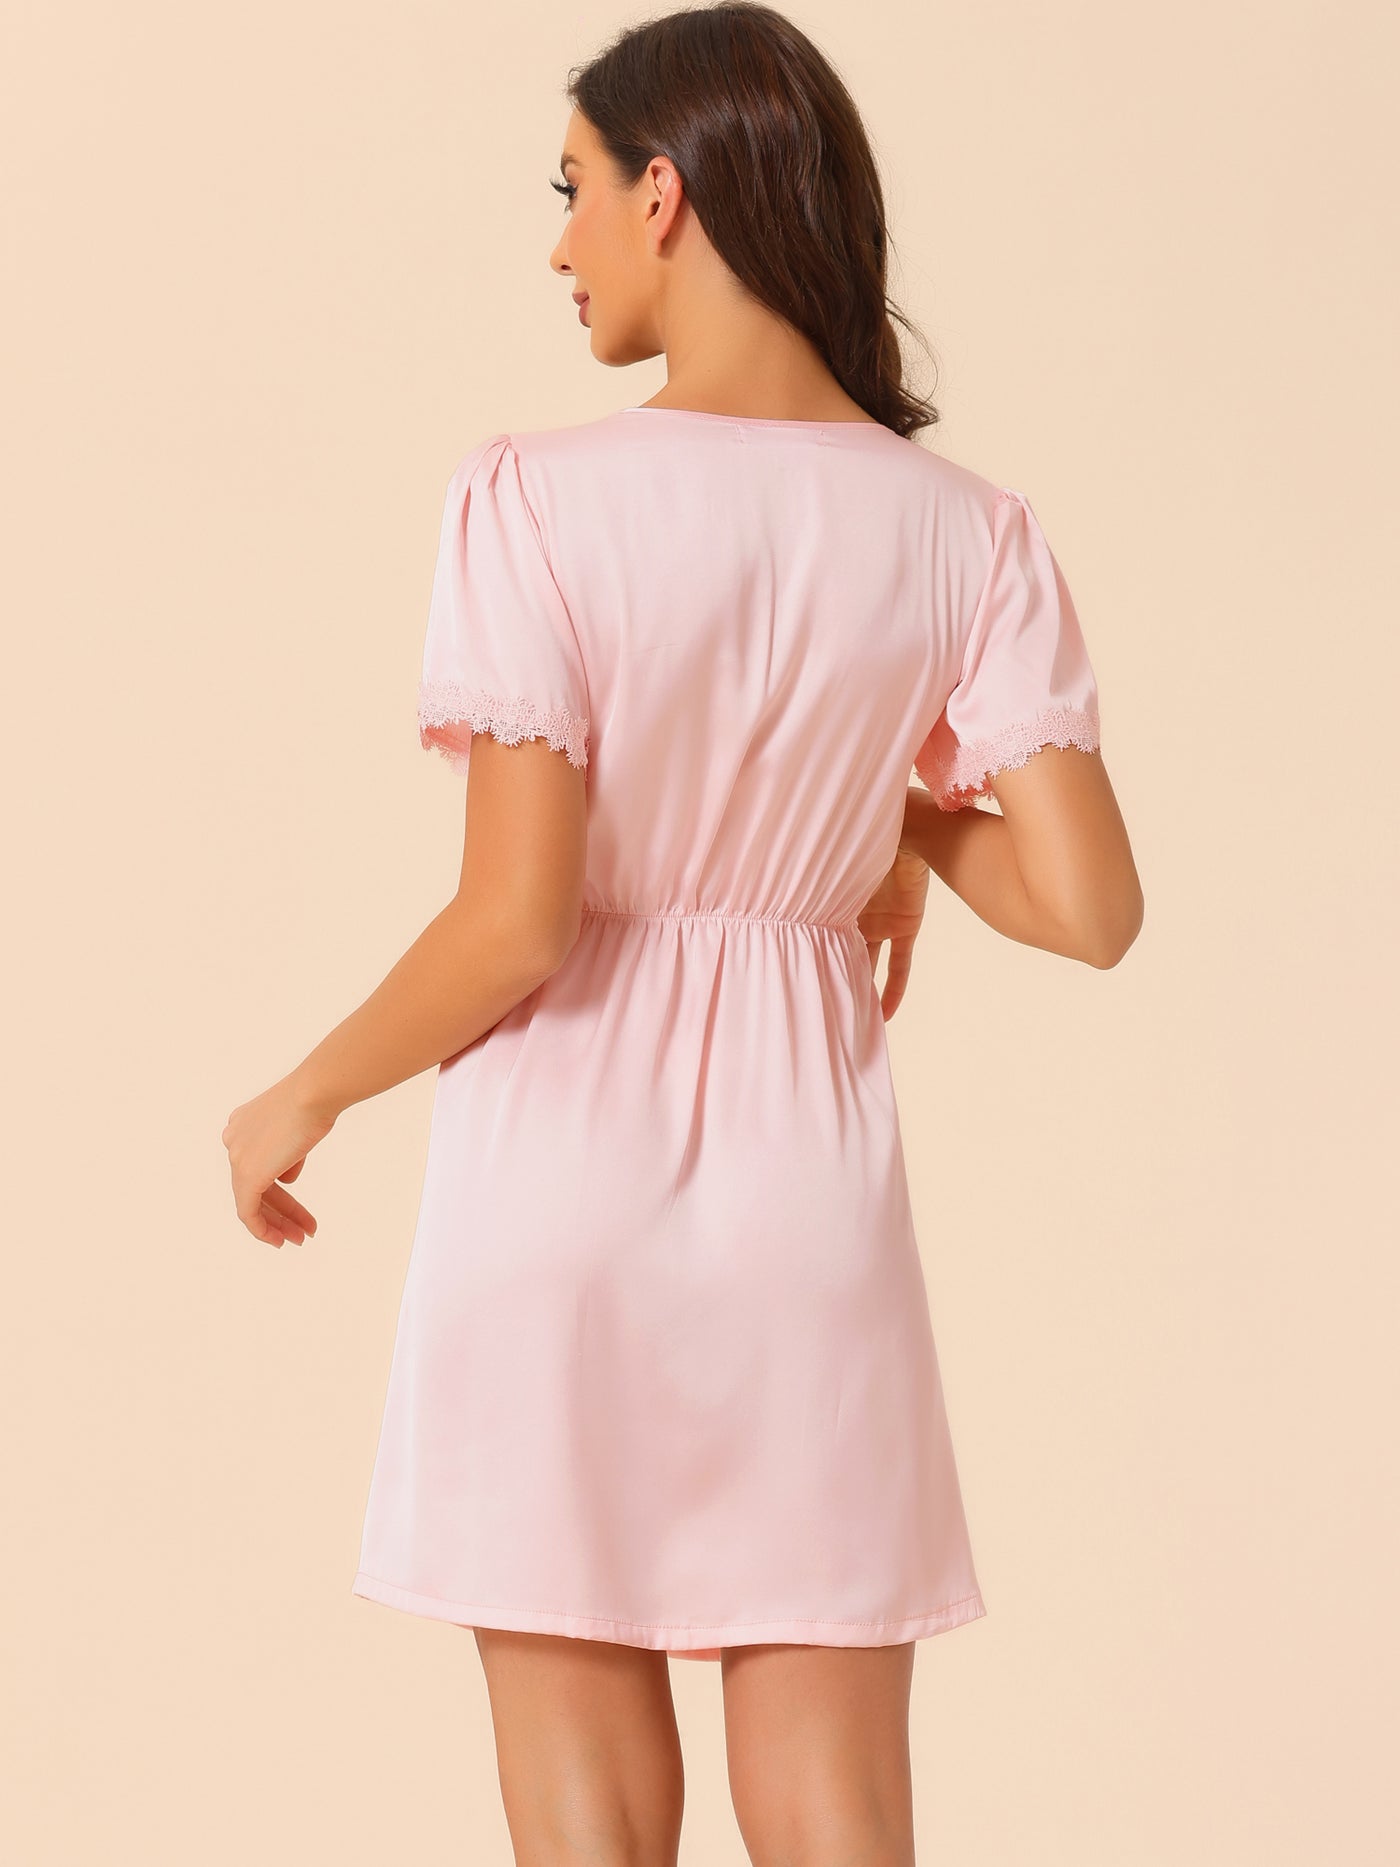 Bublédon Womens Pajamas Short Sleeves V Neck Sleepwear Lace Trim Lounge Nightgowns